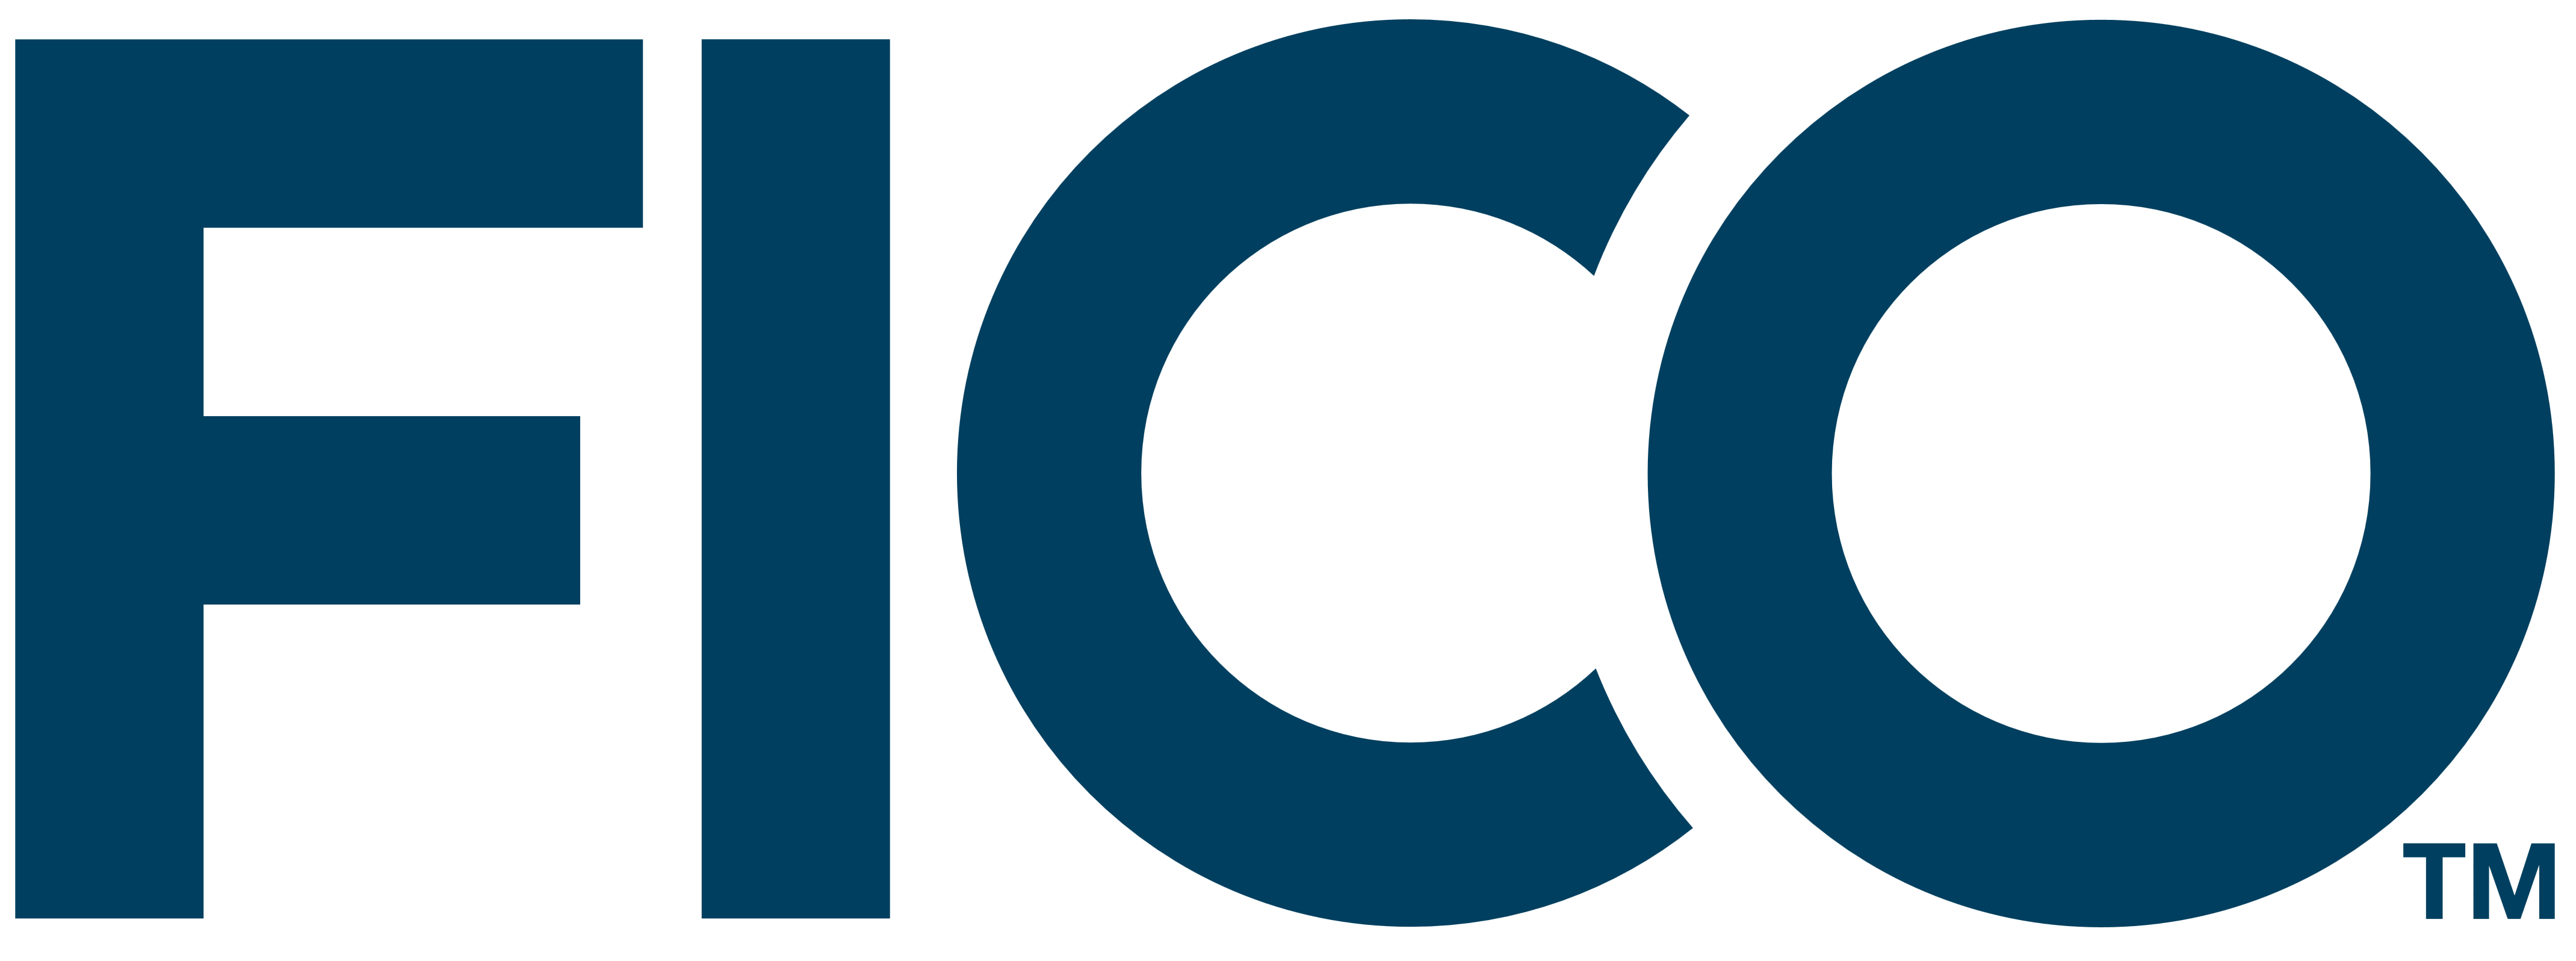 FICO logo, logotype